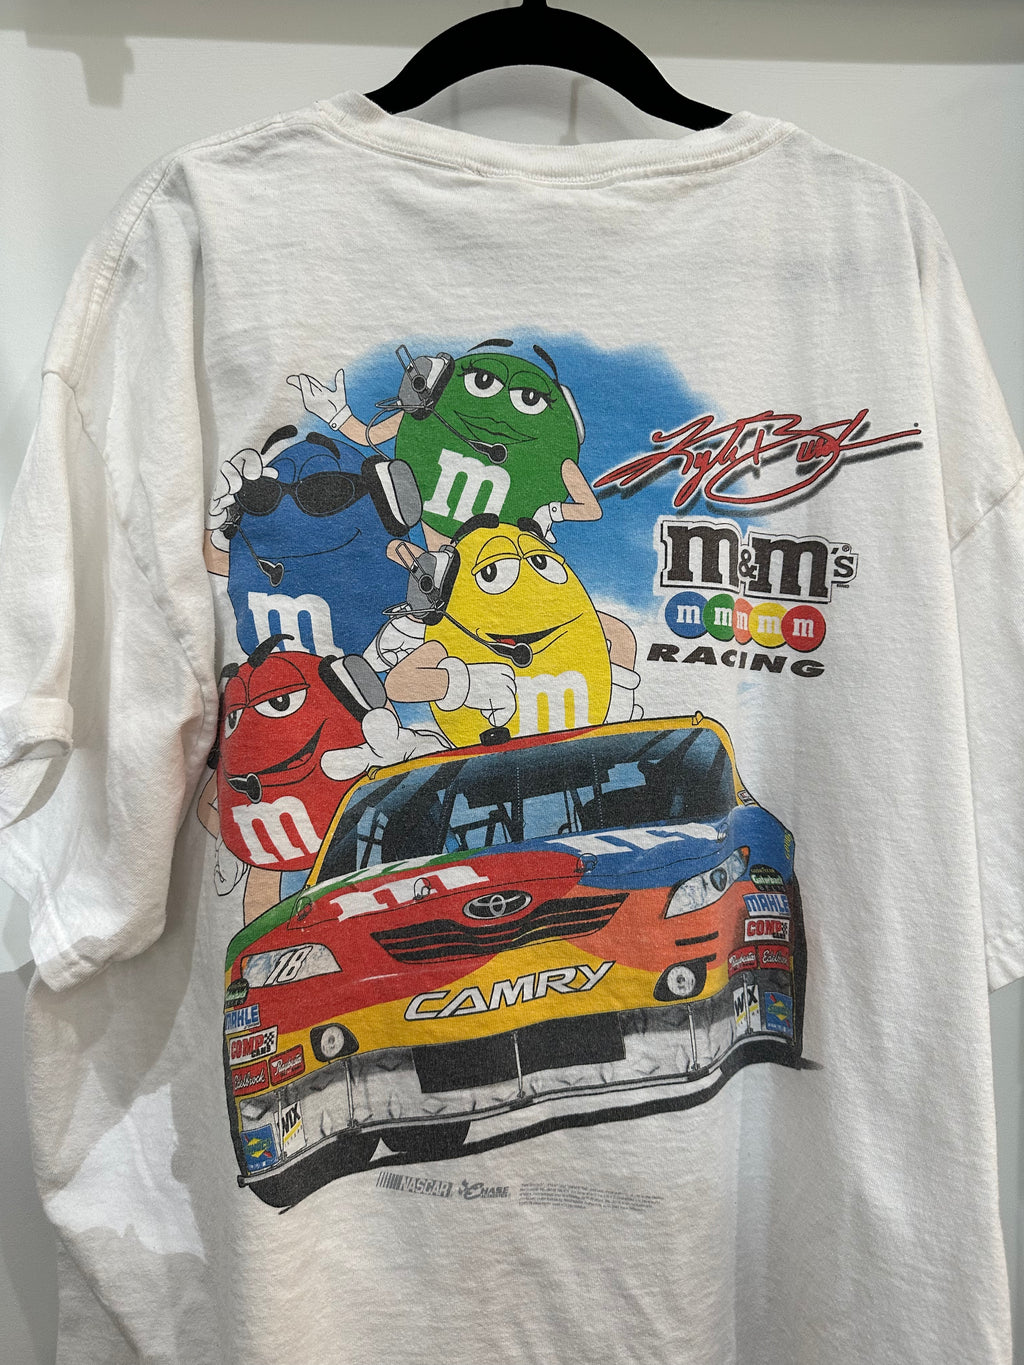 Kyle Bush M&M’s Racing T-Shirt